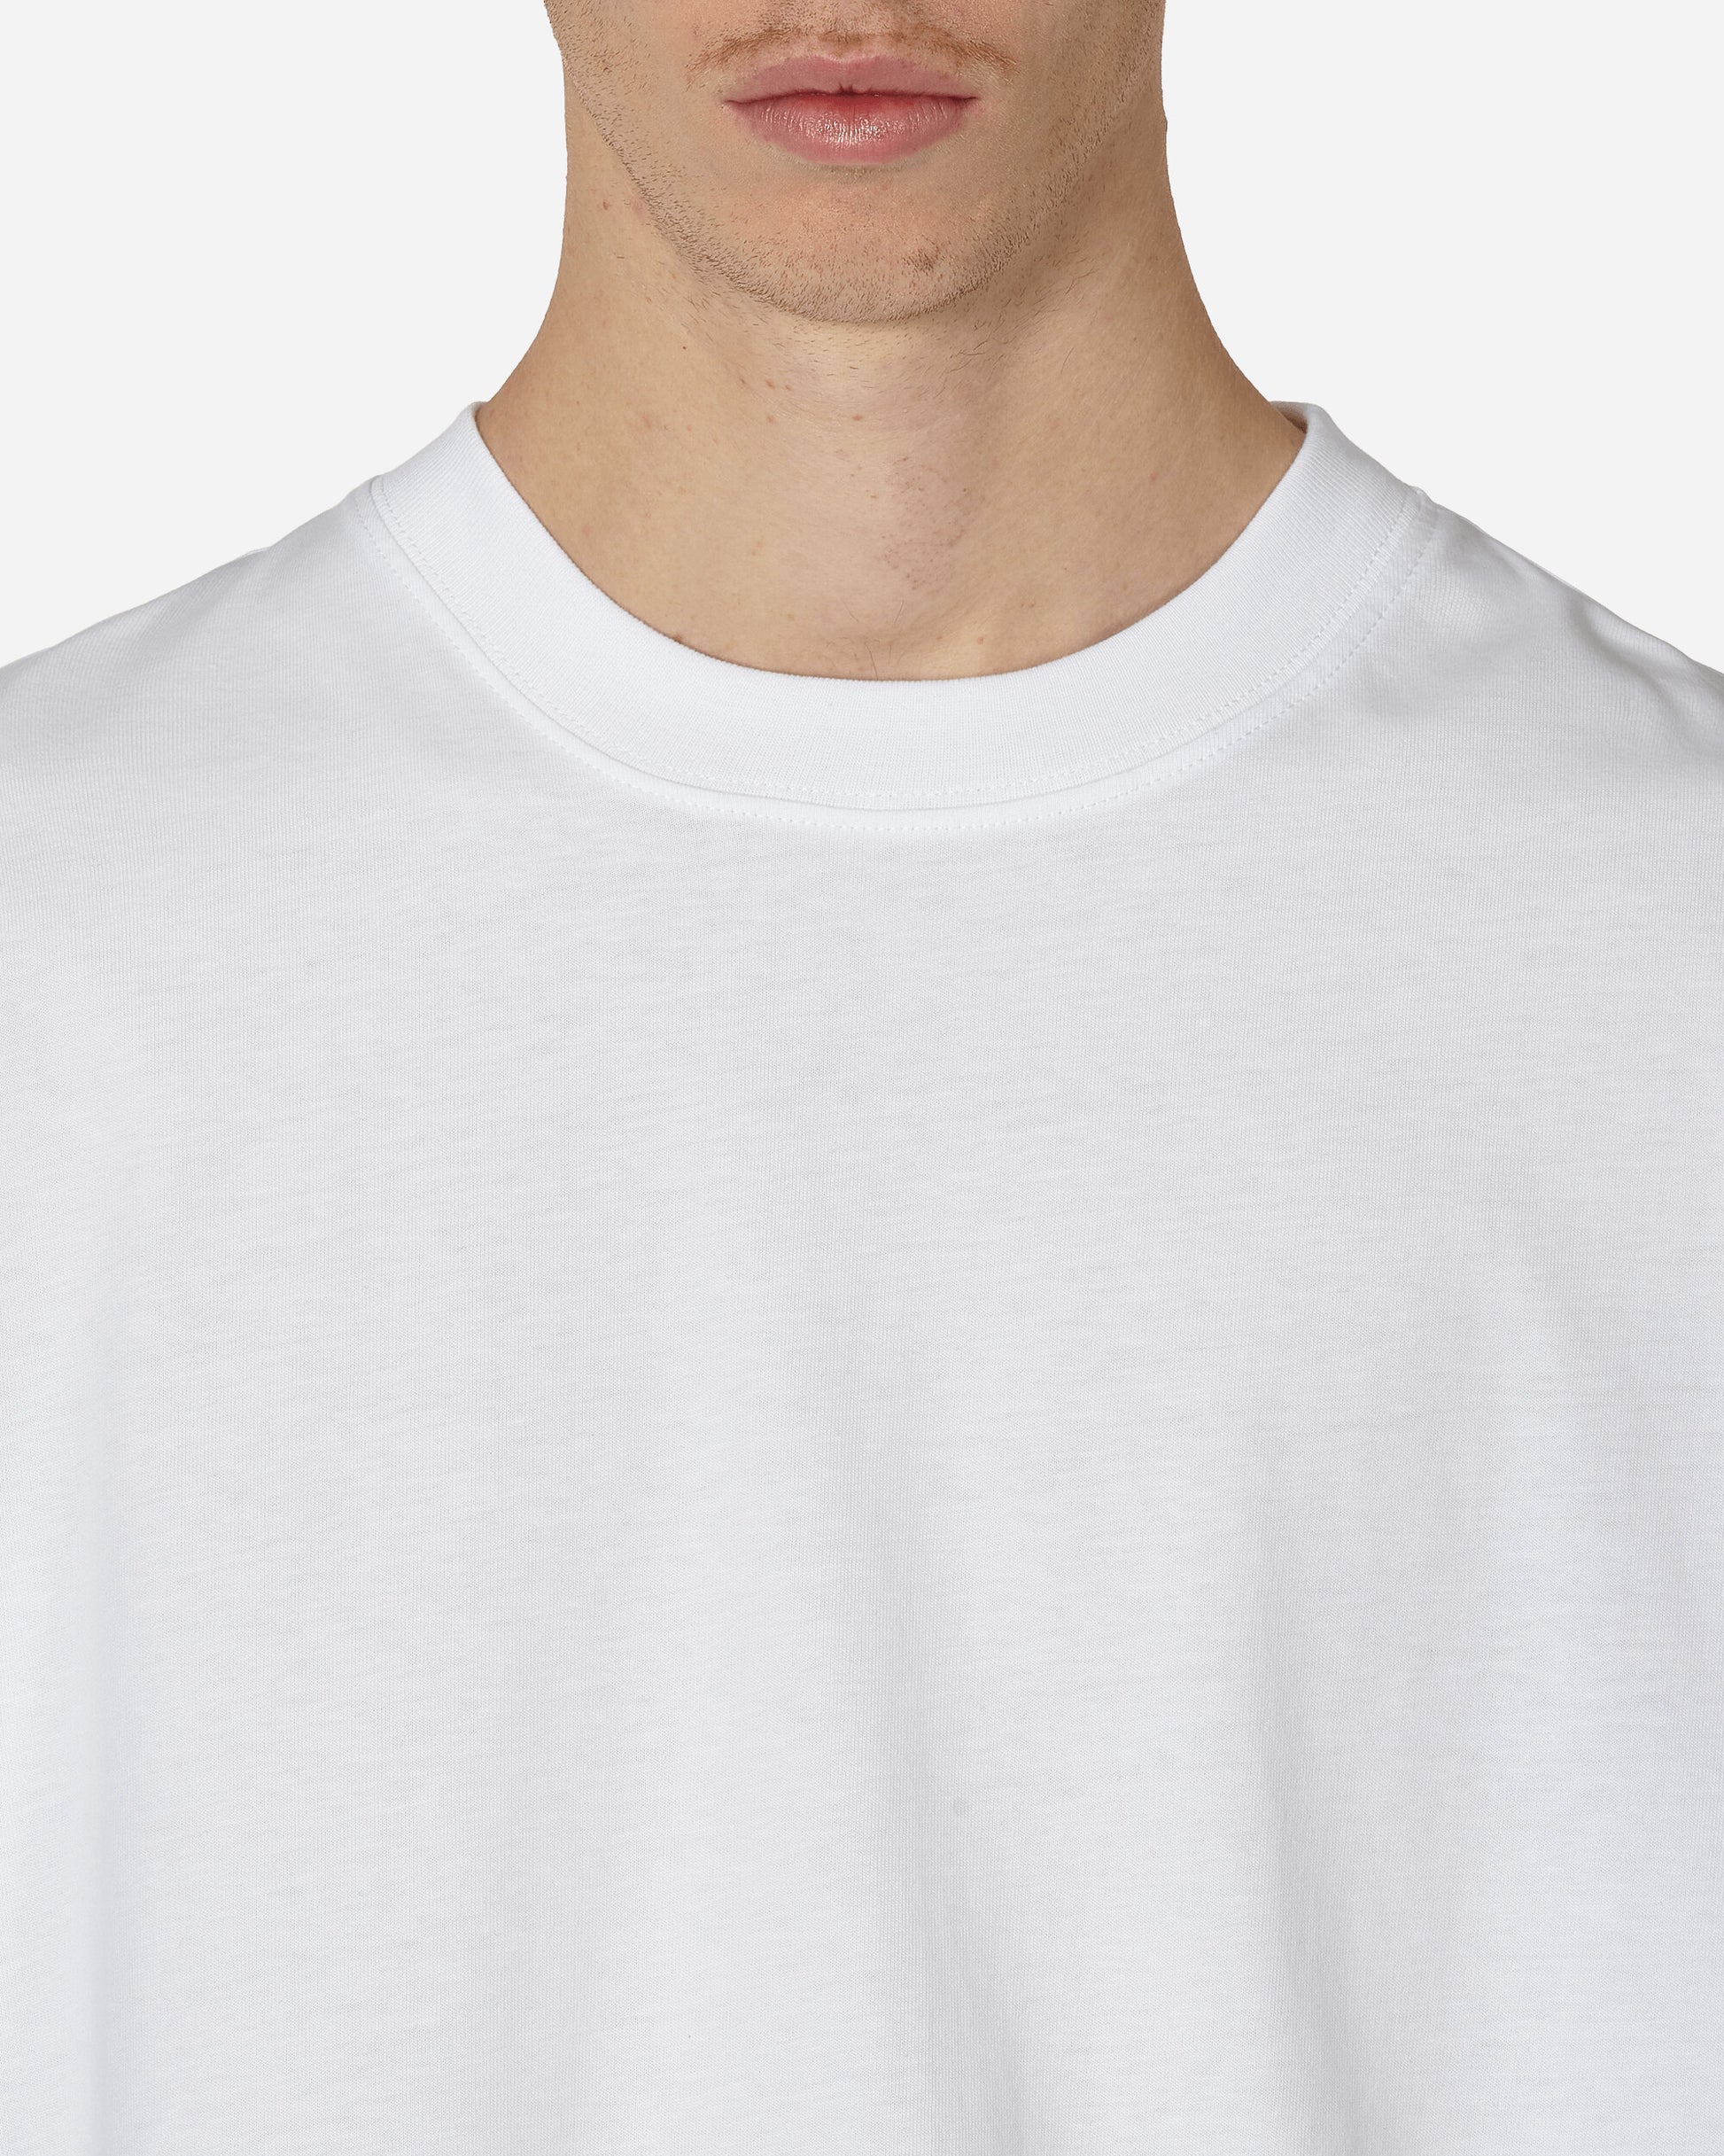 Dries Van Noten Hen T-Shirt White T-Shirts Shortsleeve 241-021117-8603 001